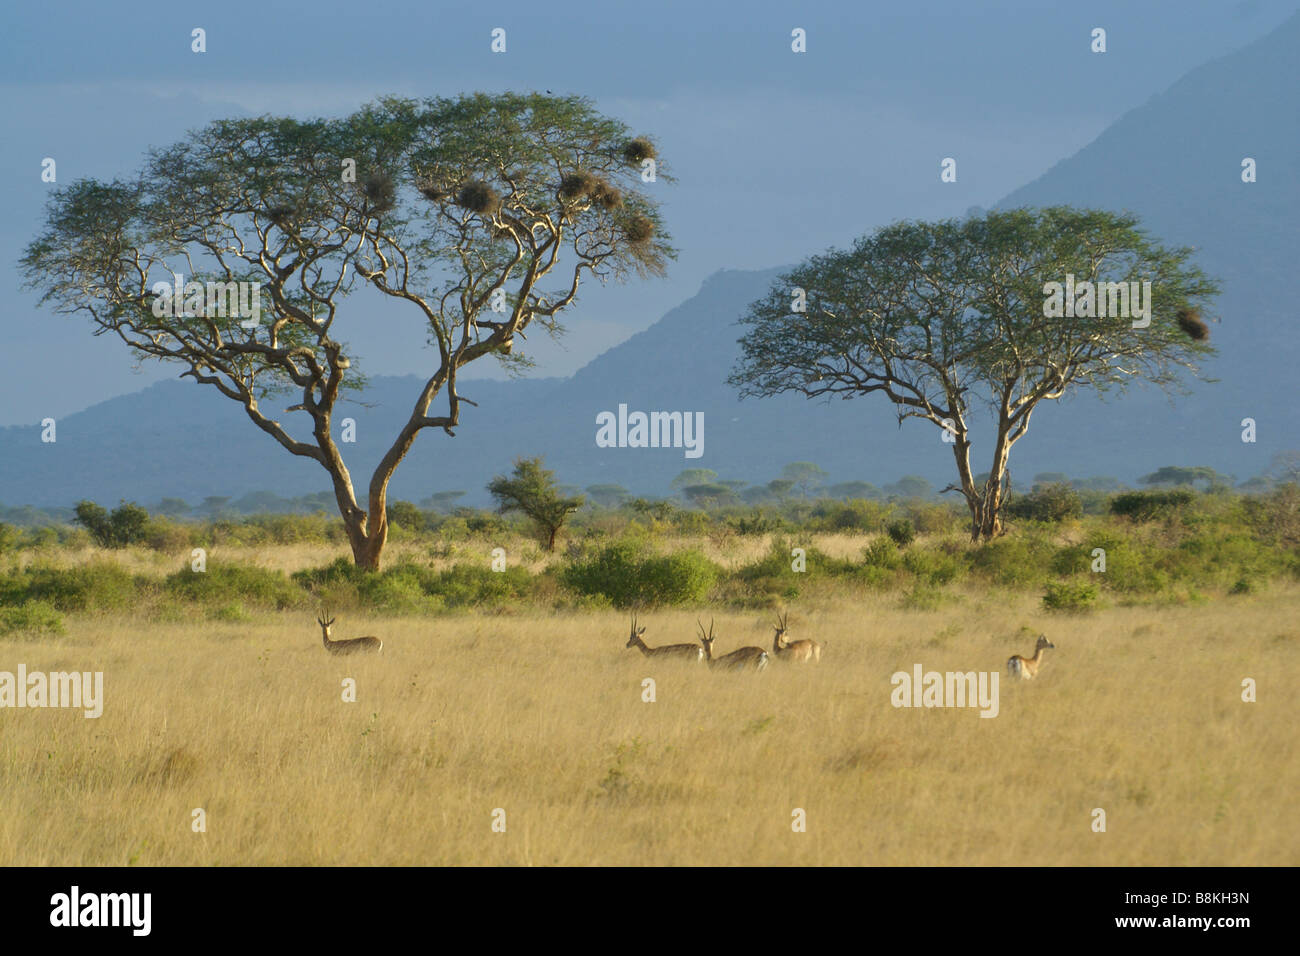 Grant Gazellen zu Fuß in Savanne, Tsavo East Nationalpark, Kenia Stockfoto